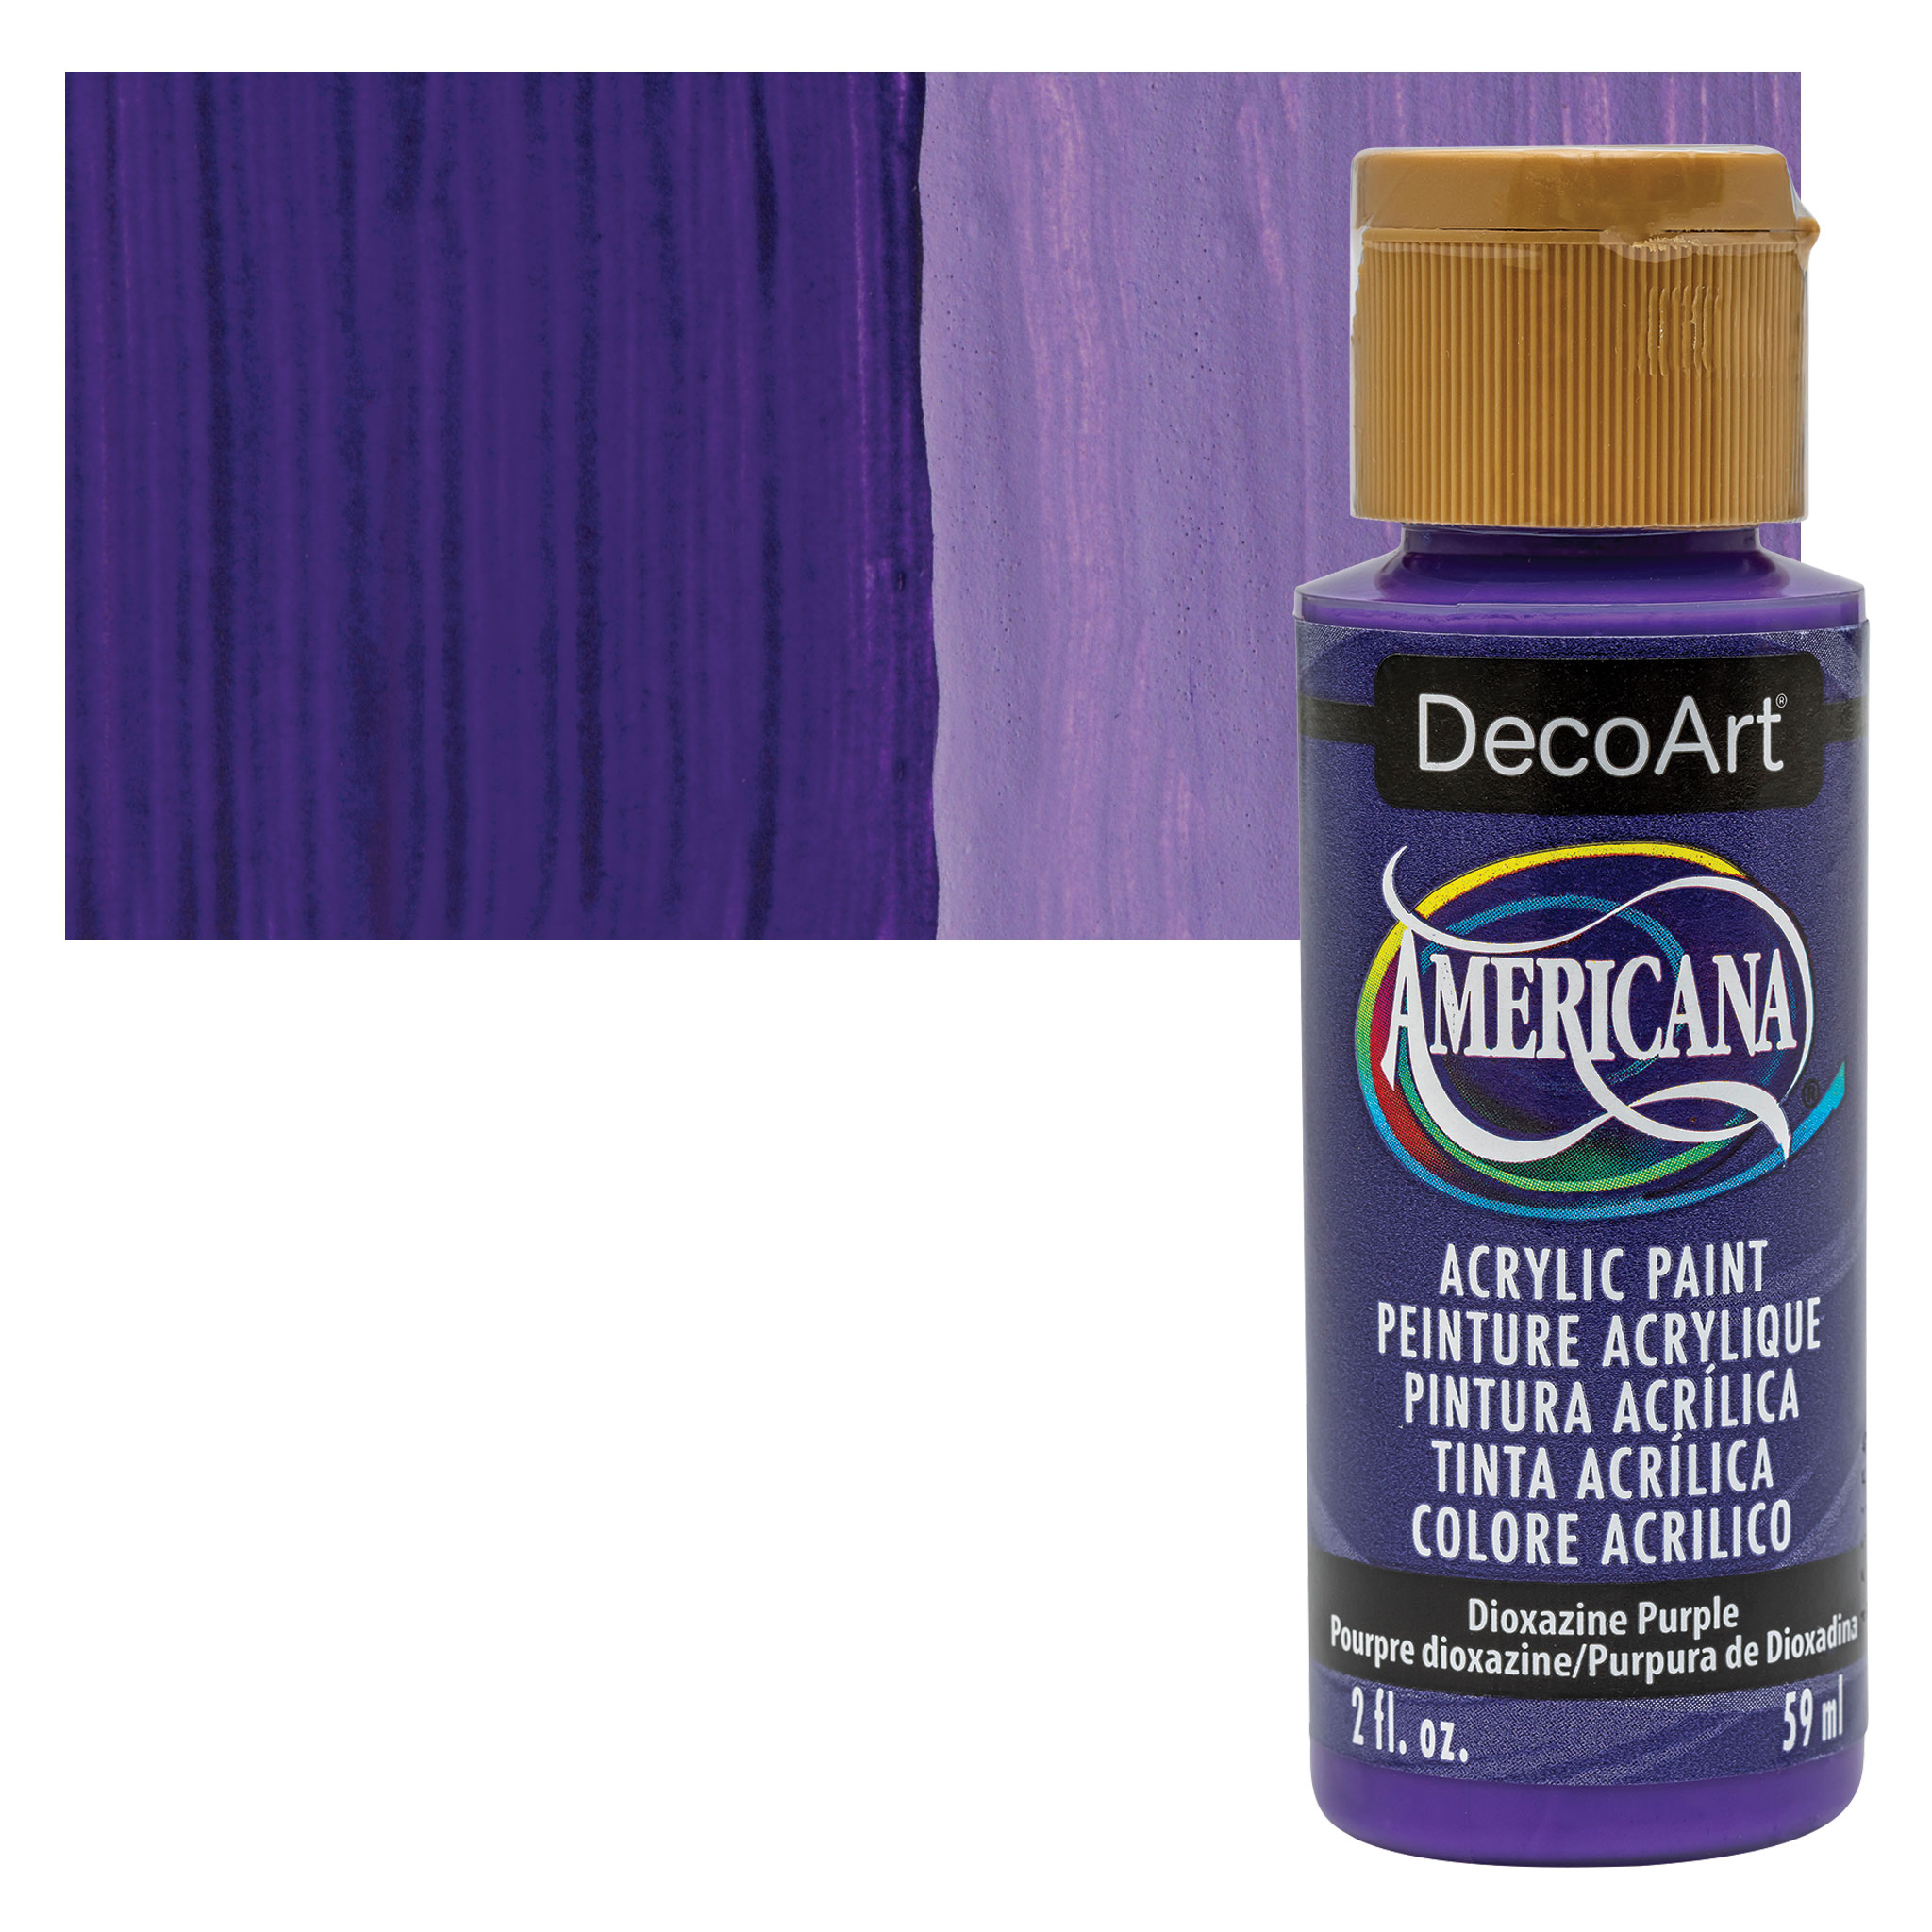 DecoArt Americana Acrylic Paint - Dioxazine Purple, 2 oz